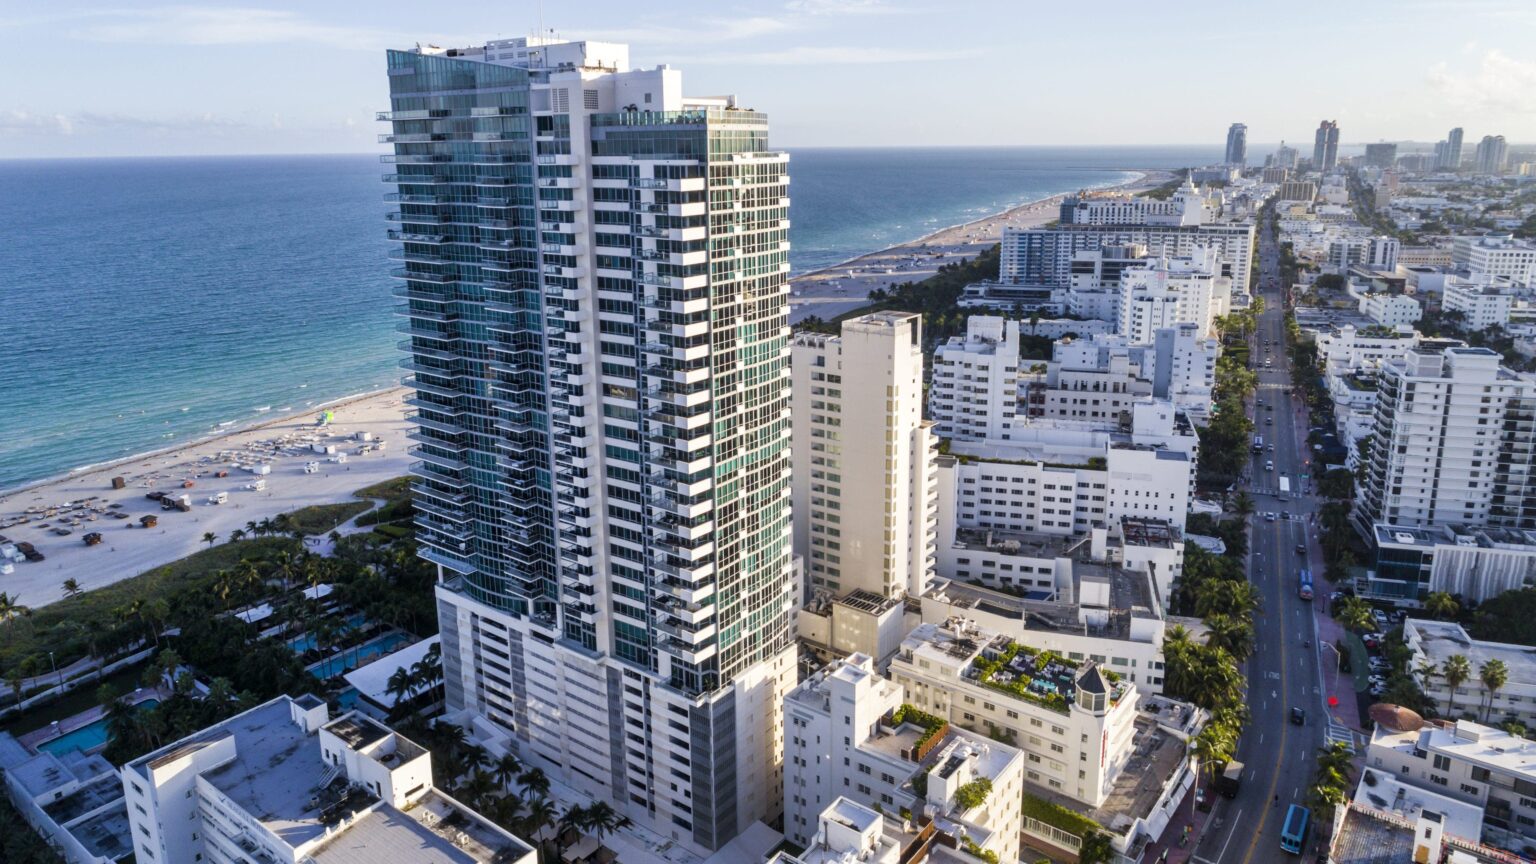 Los Angeles music mogul linked to Miami Beach